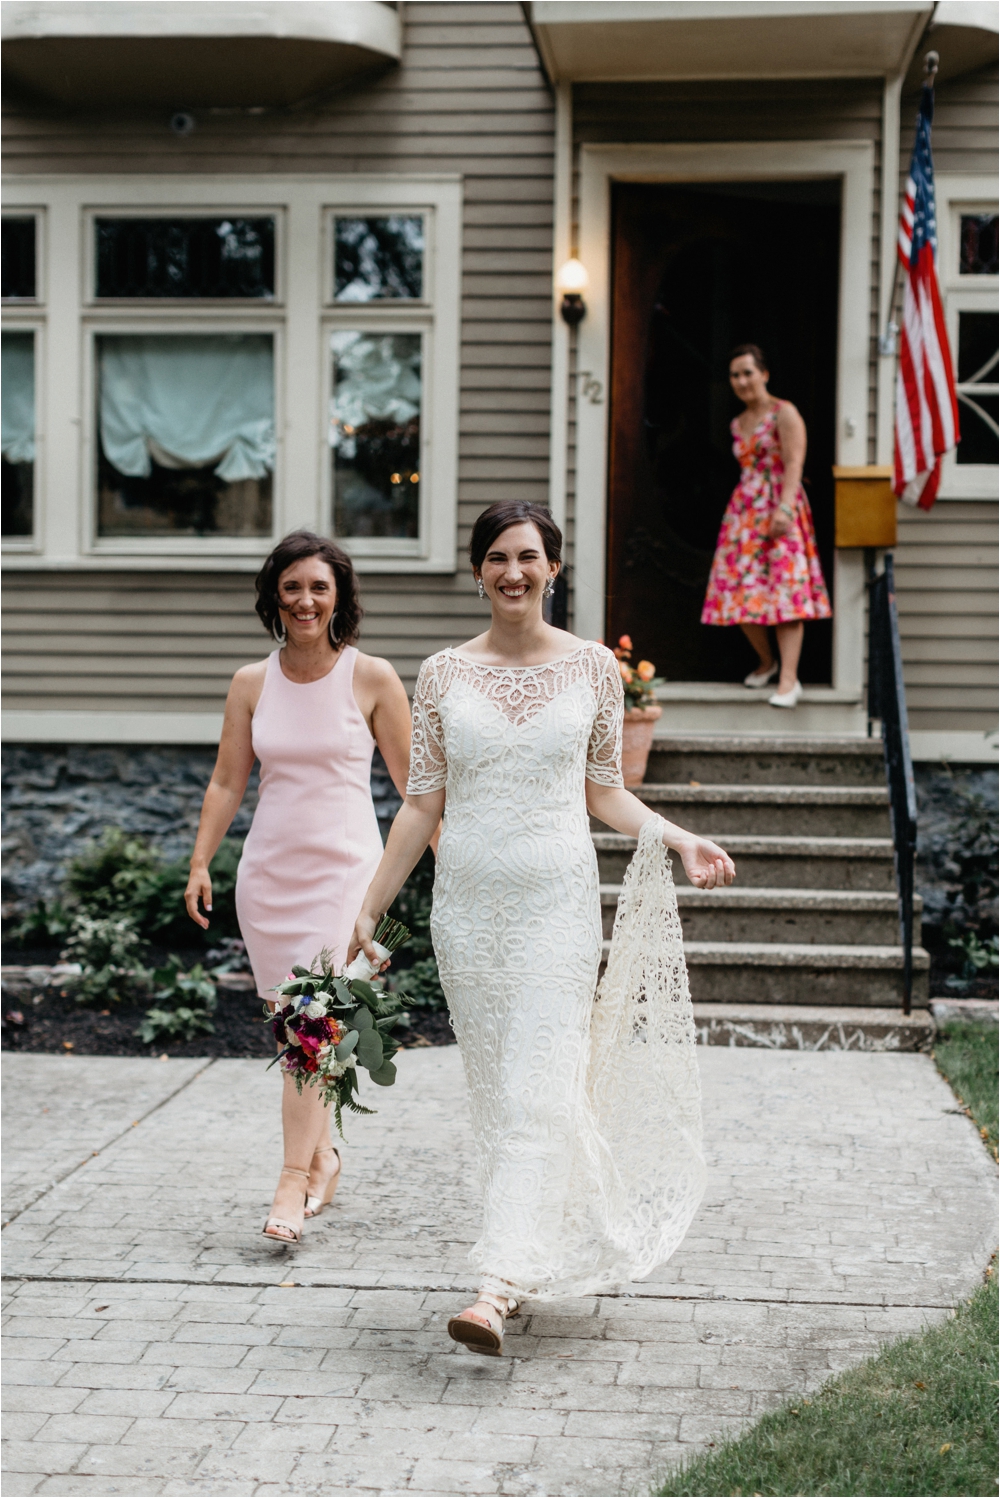 Rue De Seine bridal gown and gold salt water flats | Burchfield Penney Wedding in Buffalo, New York